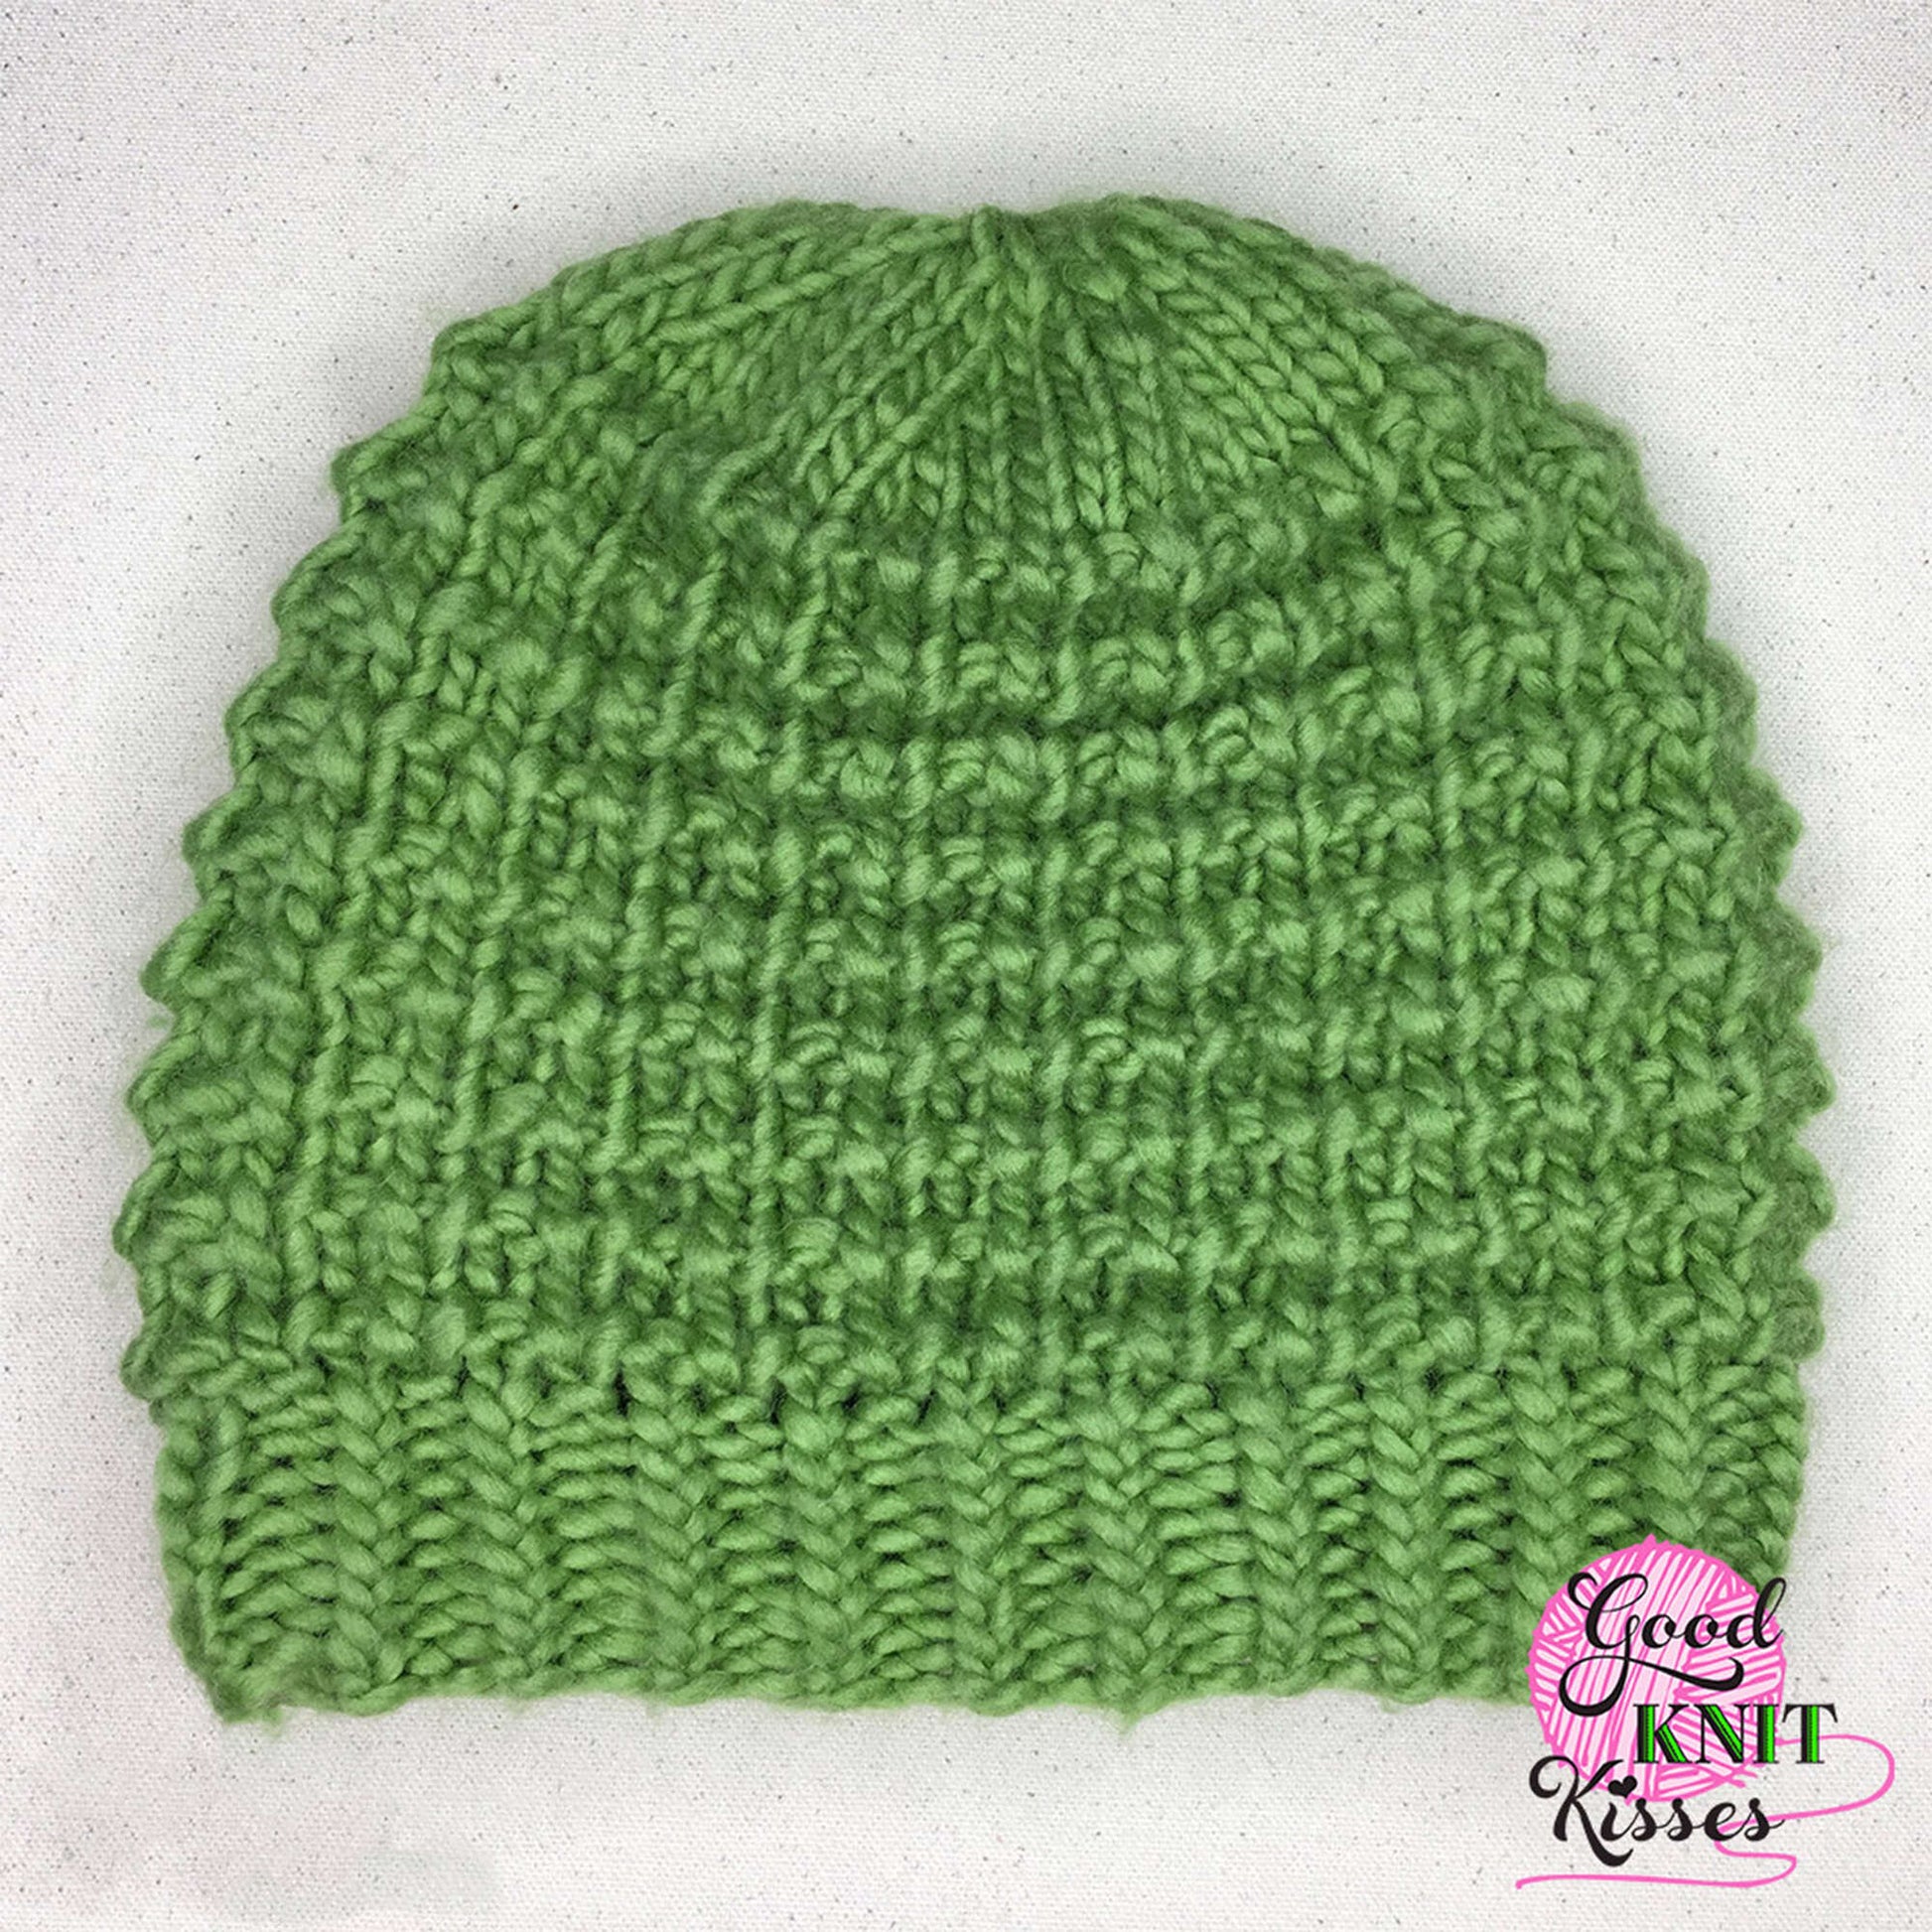 Basic Loom Knit Hat - Loom Knit